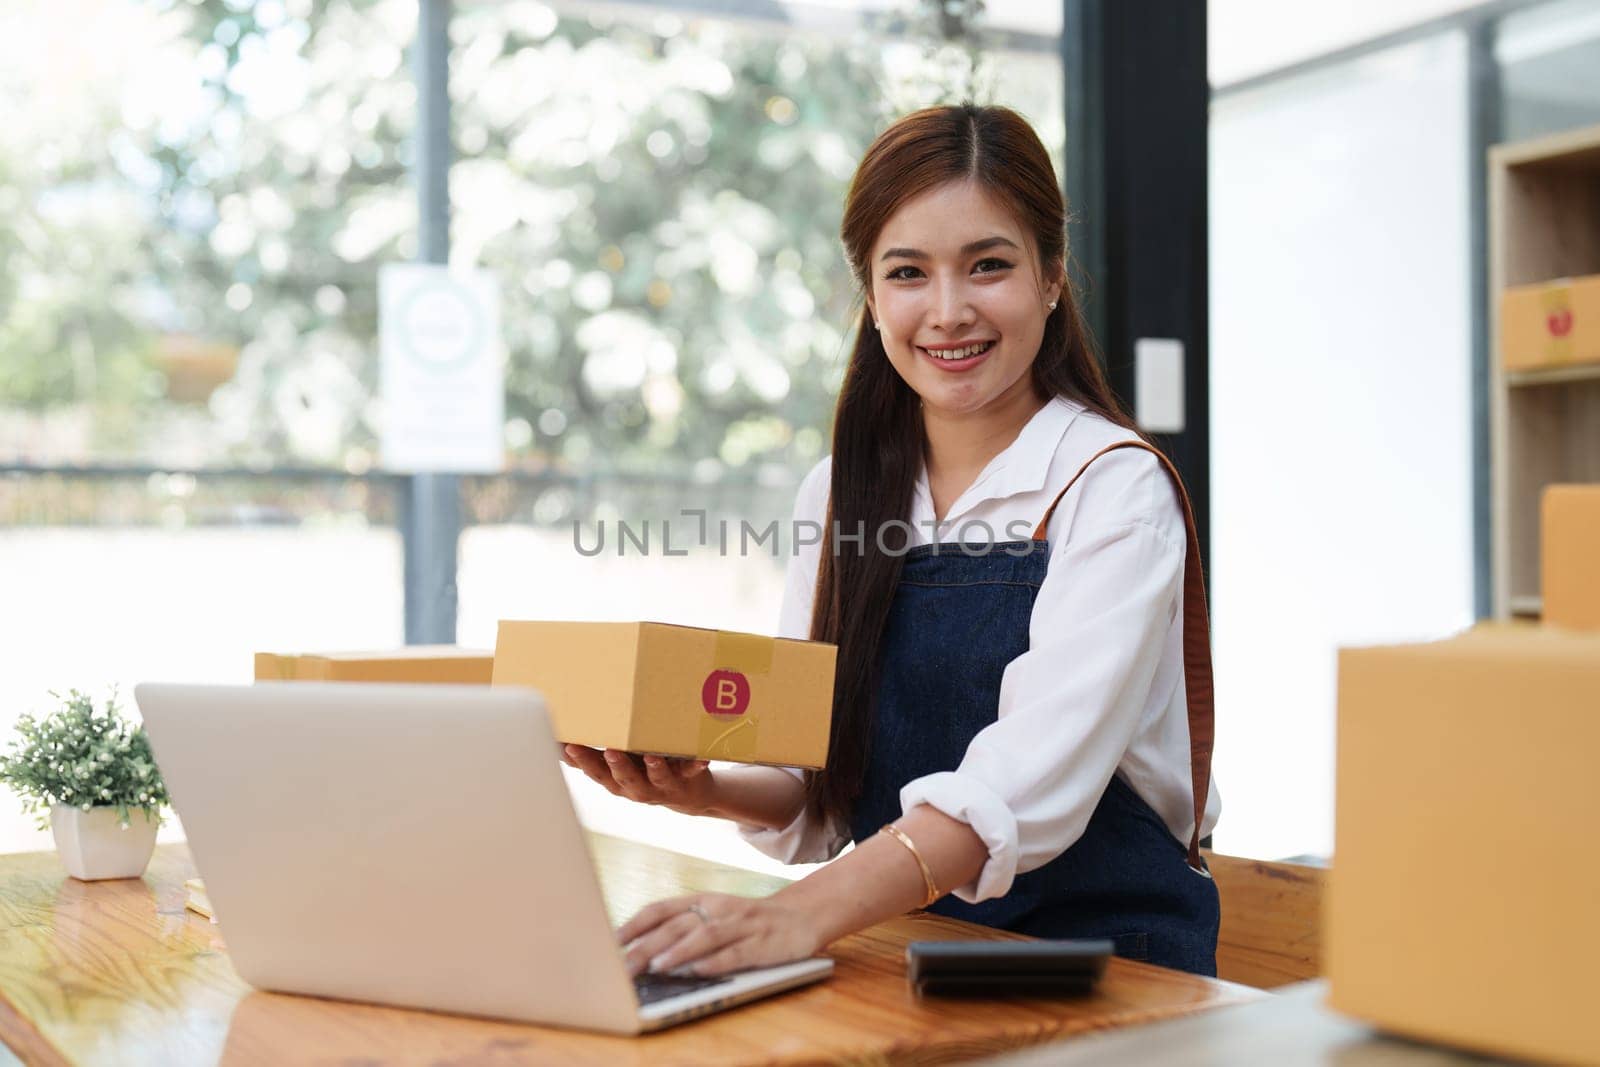 Small businesses SME owners female entrepreneurs working with parcel, e-business, marketing, online shop, sme, entrepreneurs.